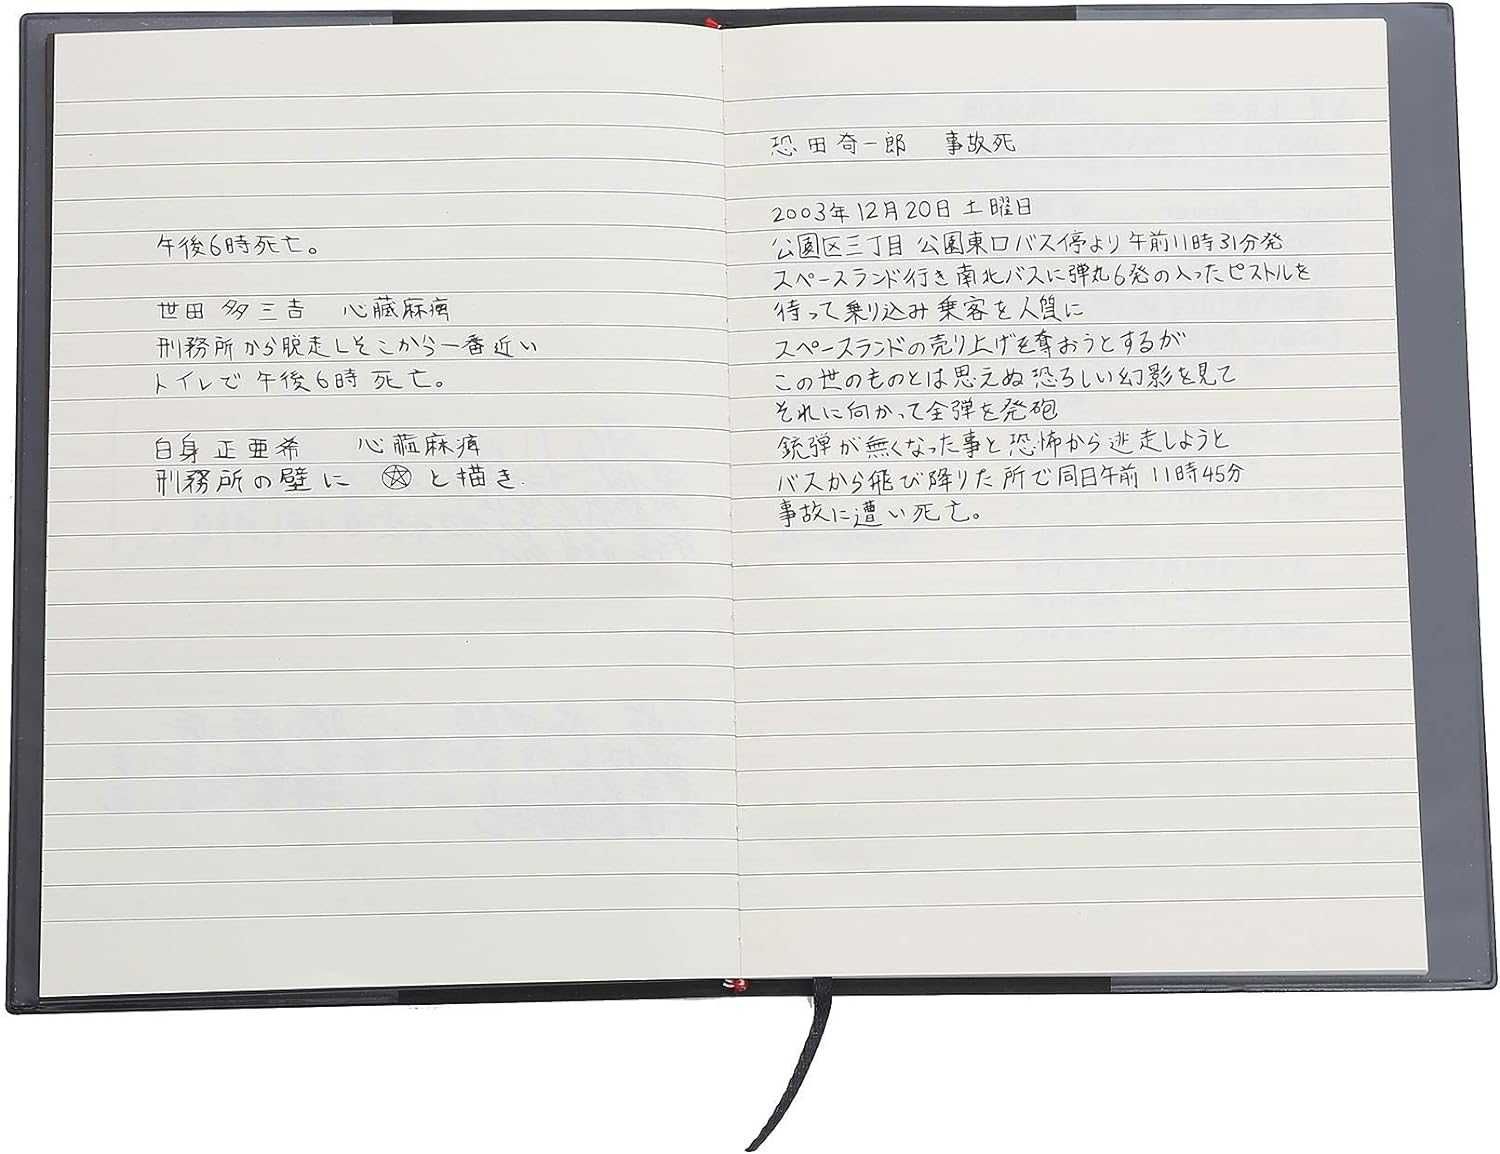 Death Note caderno + caneta pena + marcador - NOVO - ENVIO GRÁTIS